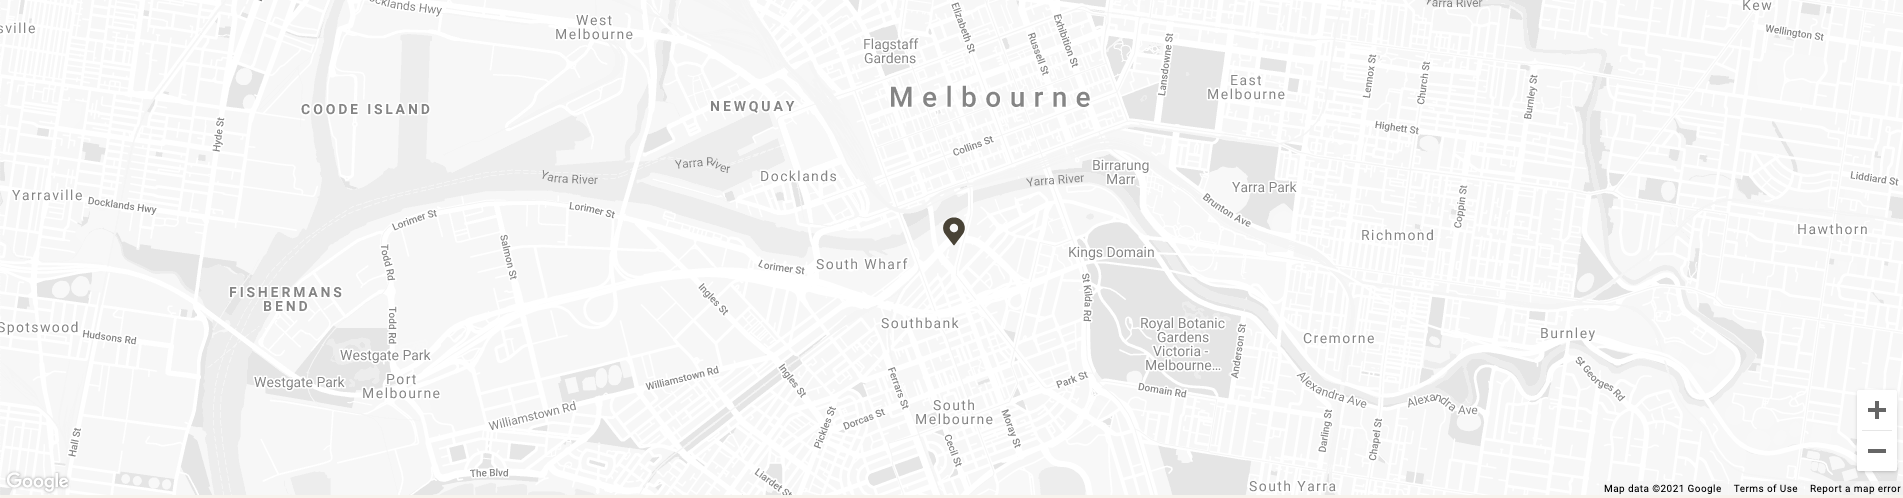 Map image of Crown Promenade Melbourne